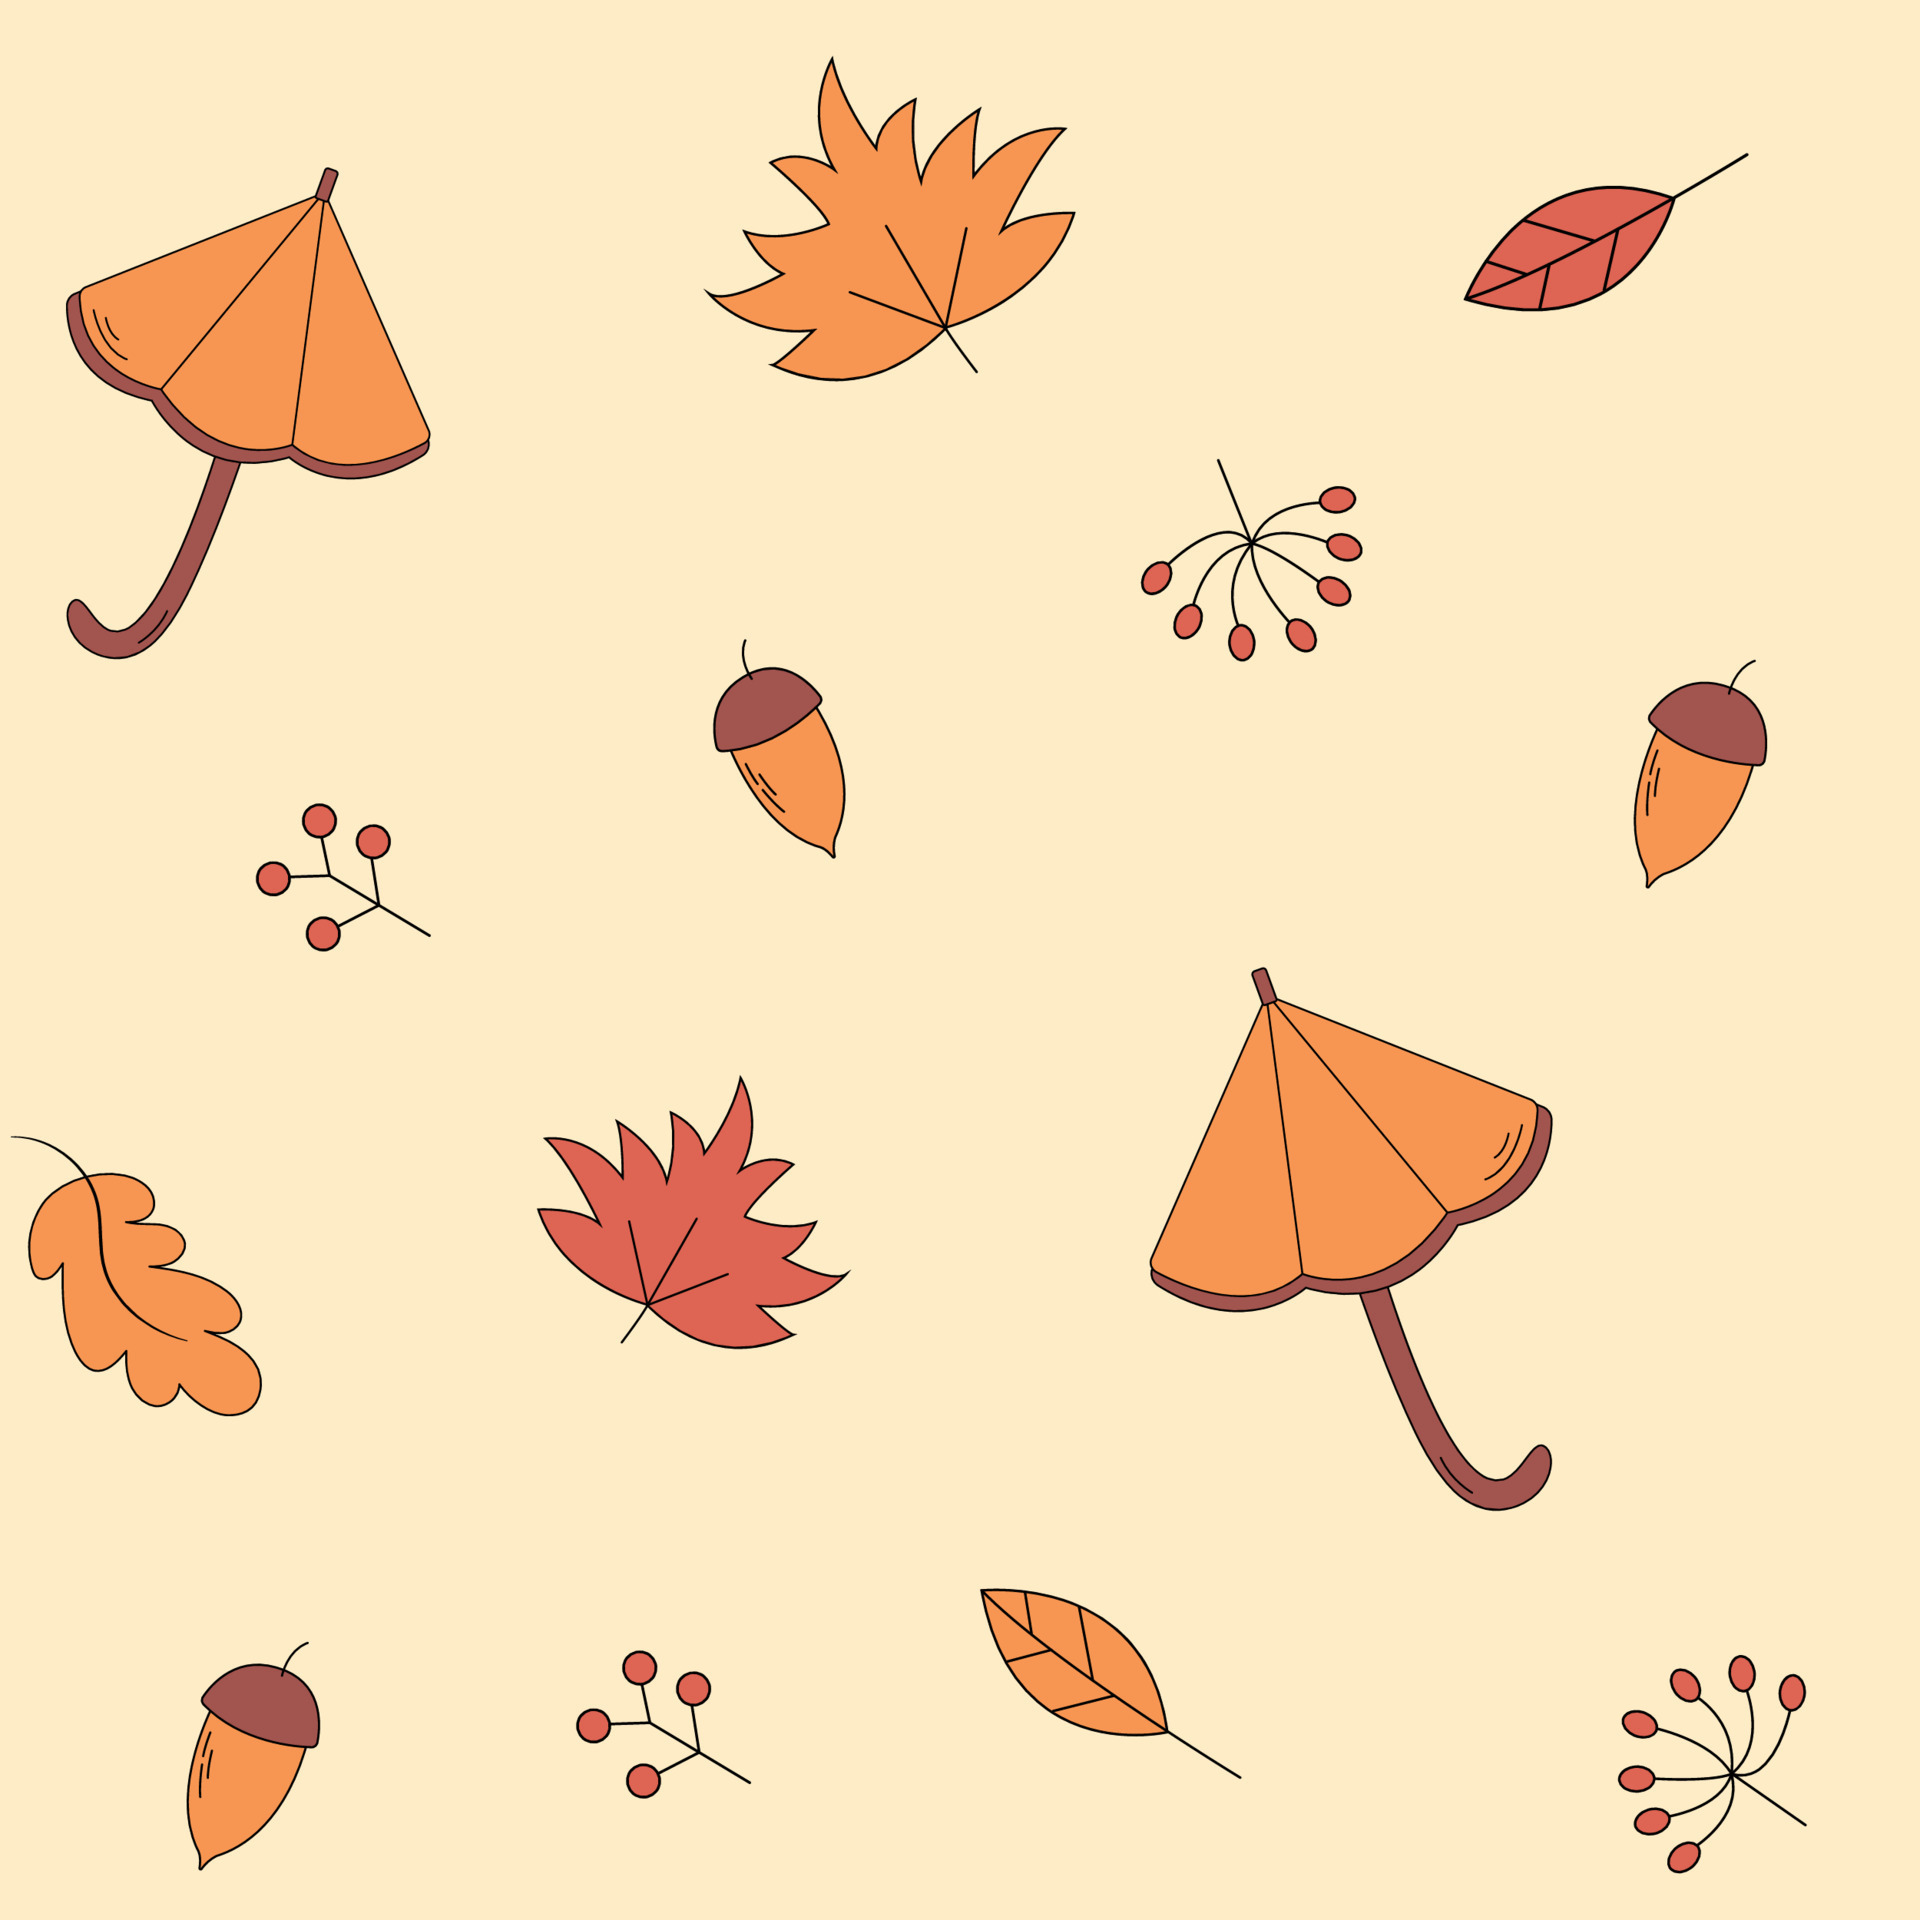 673509 Autumn Cartoon Images Stock Photos  Vectors  Shutterstock